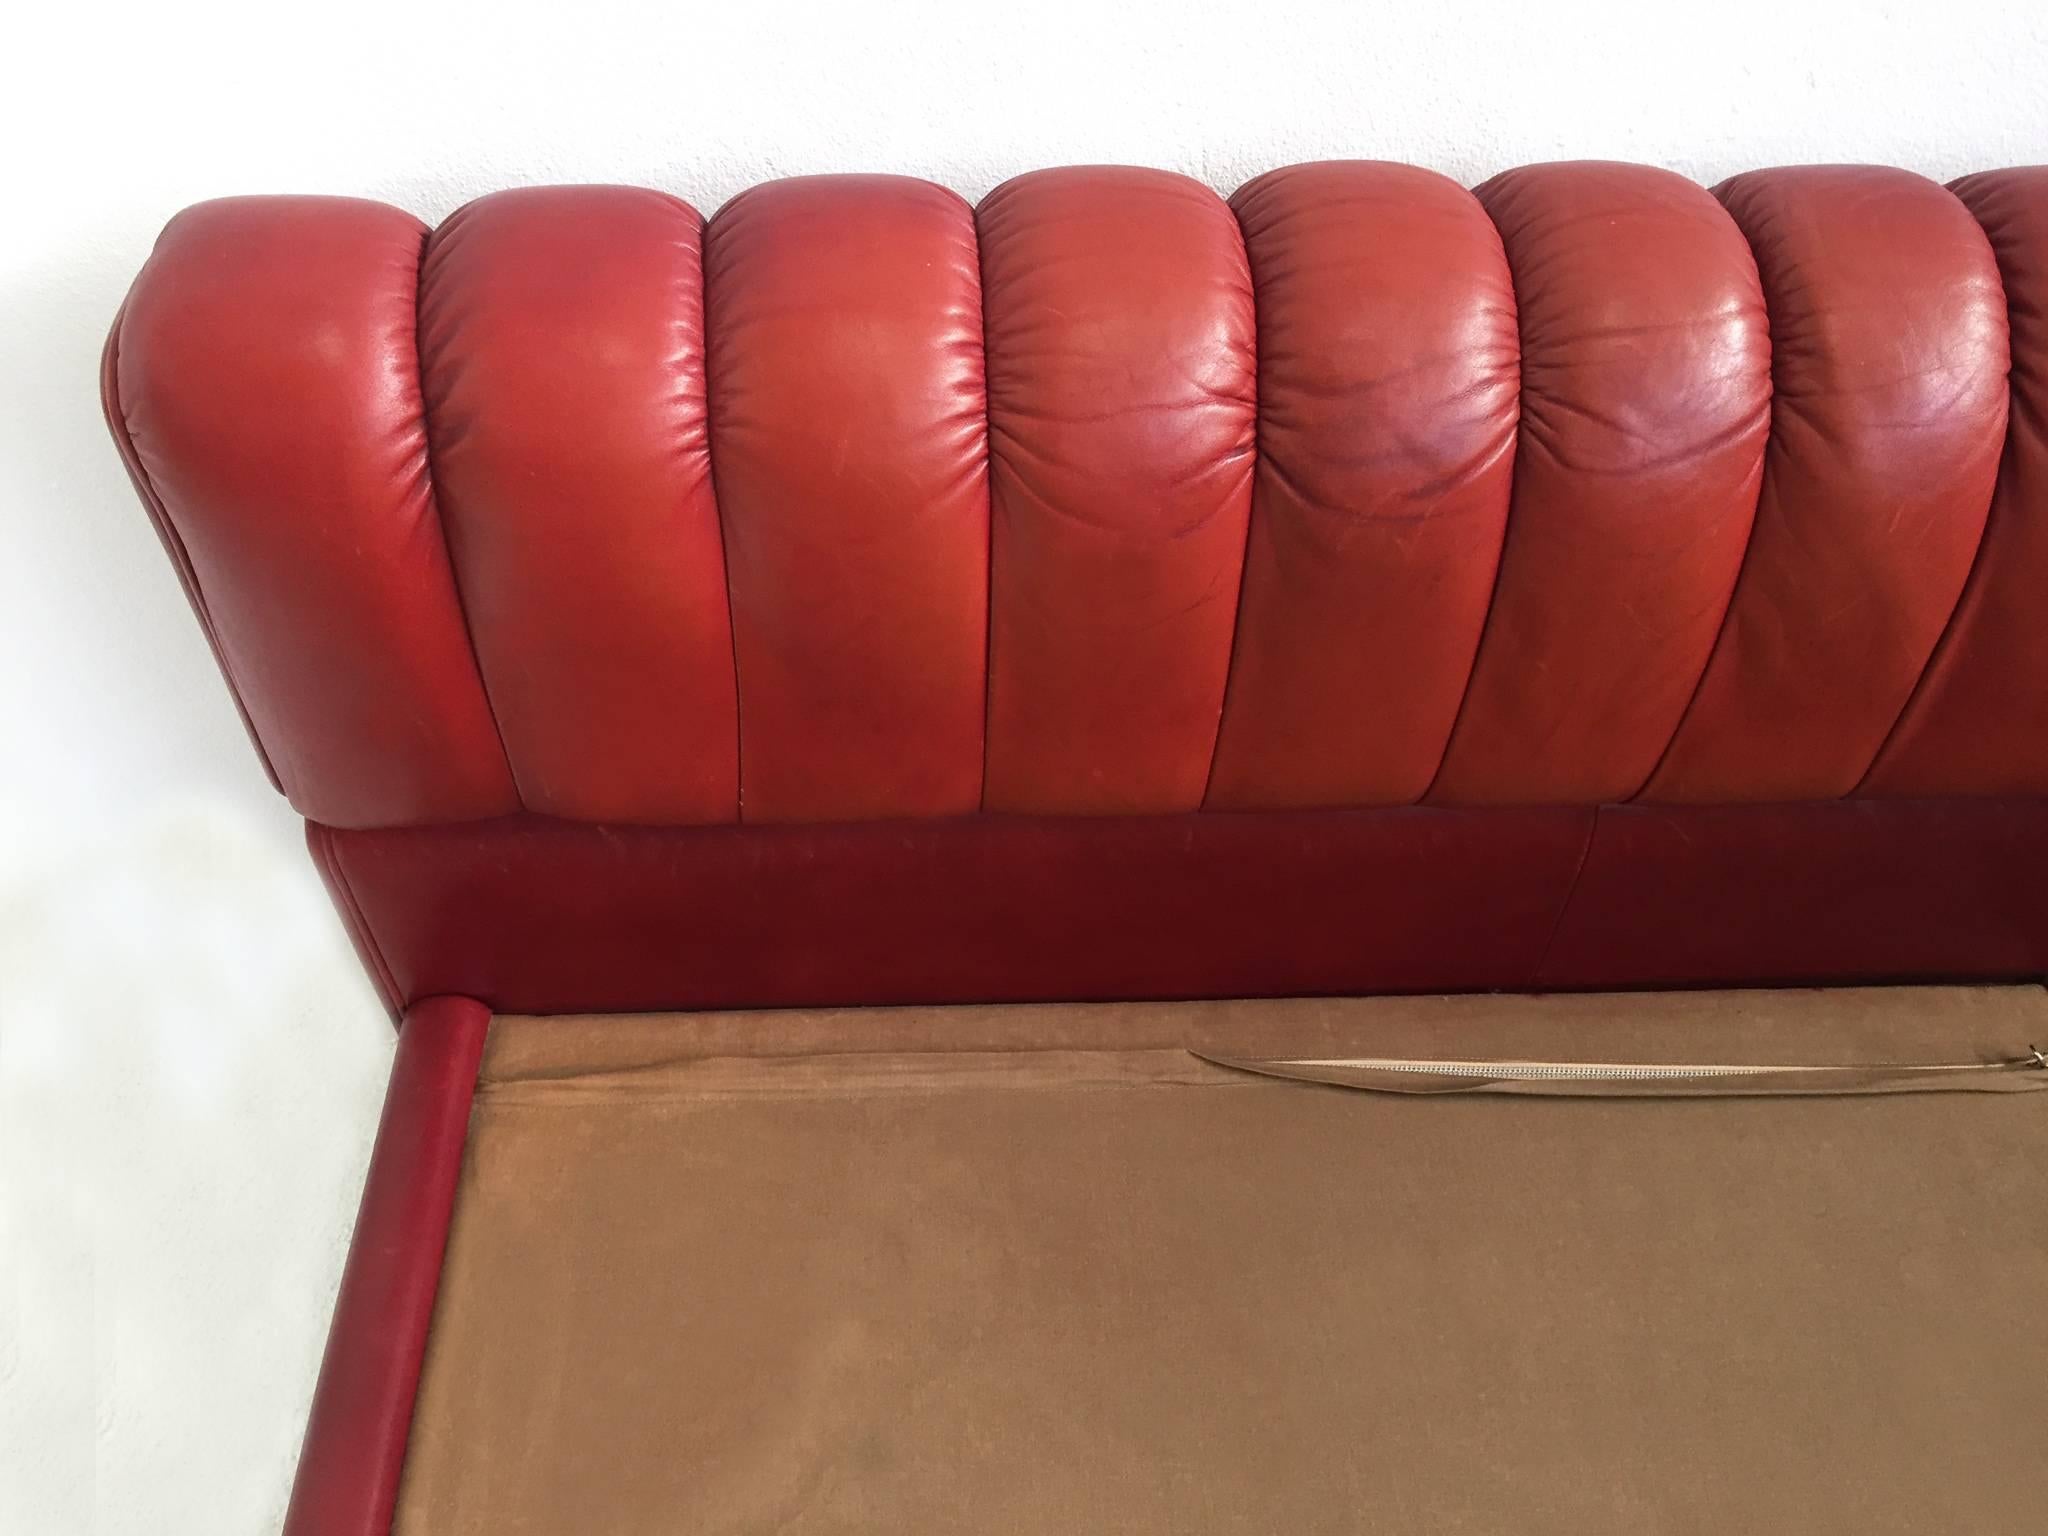 Patinated Patina Leather Bed, Luigi Massoni 1972, Poltrona Frau